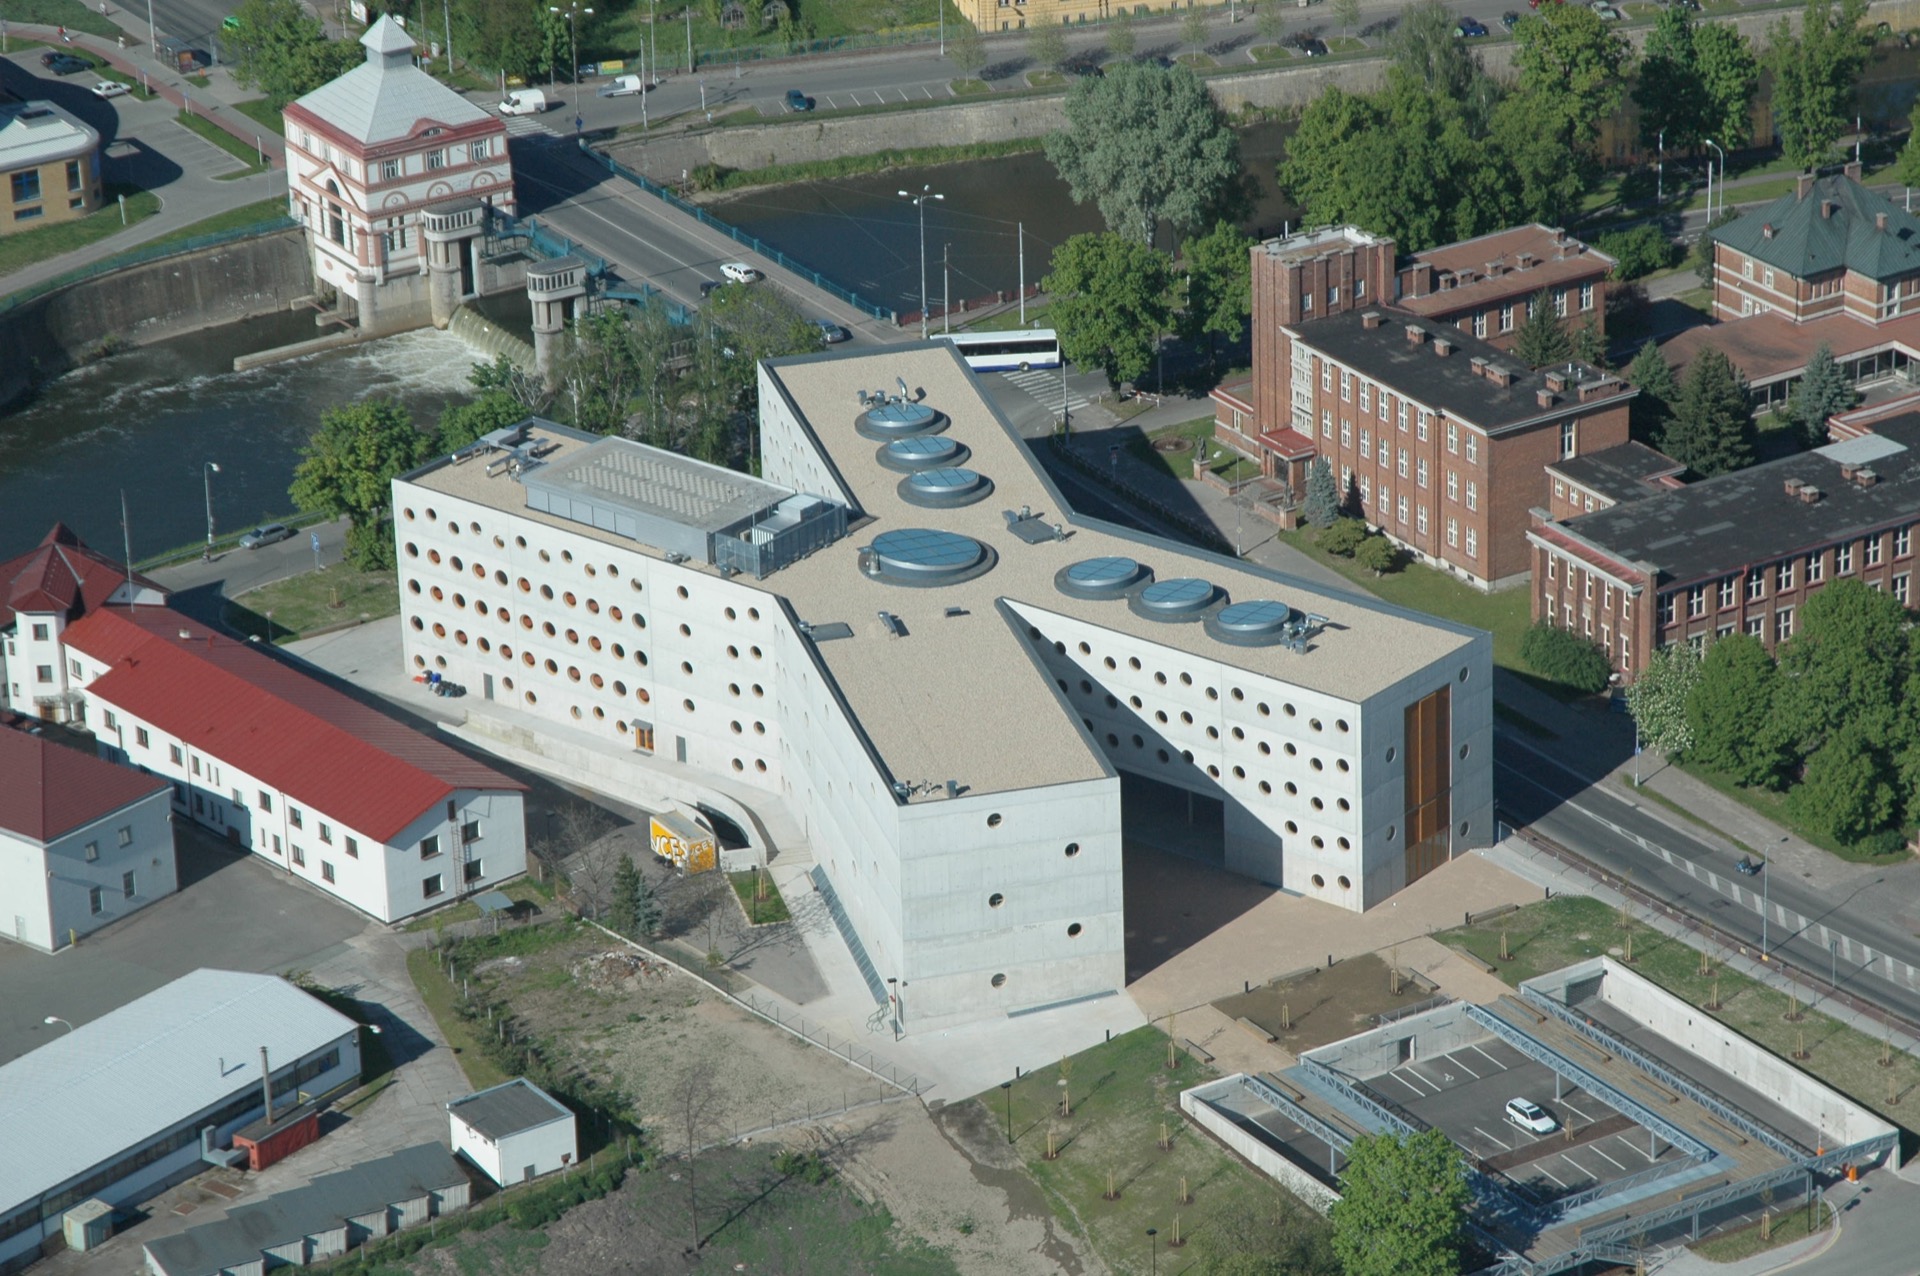 SVK HK Research Library in Hradec Králové building architecture design exterior view